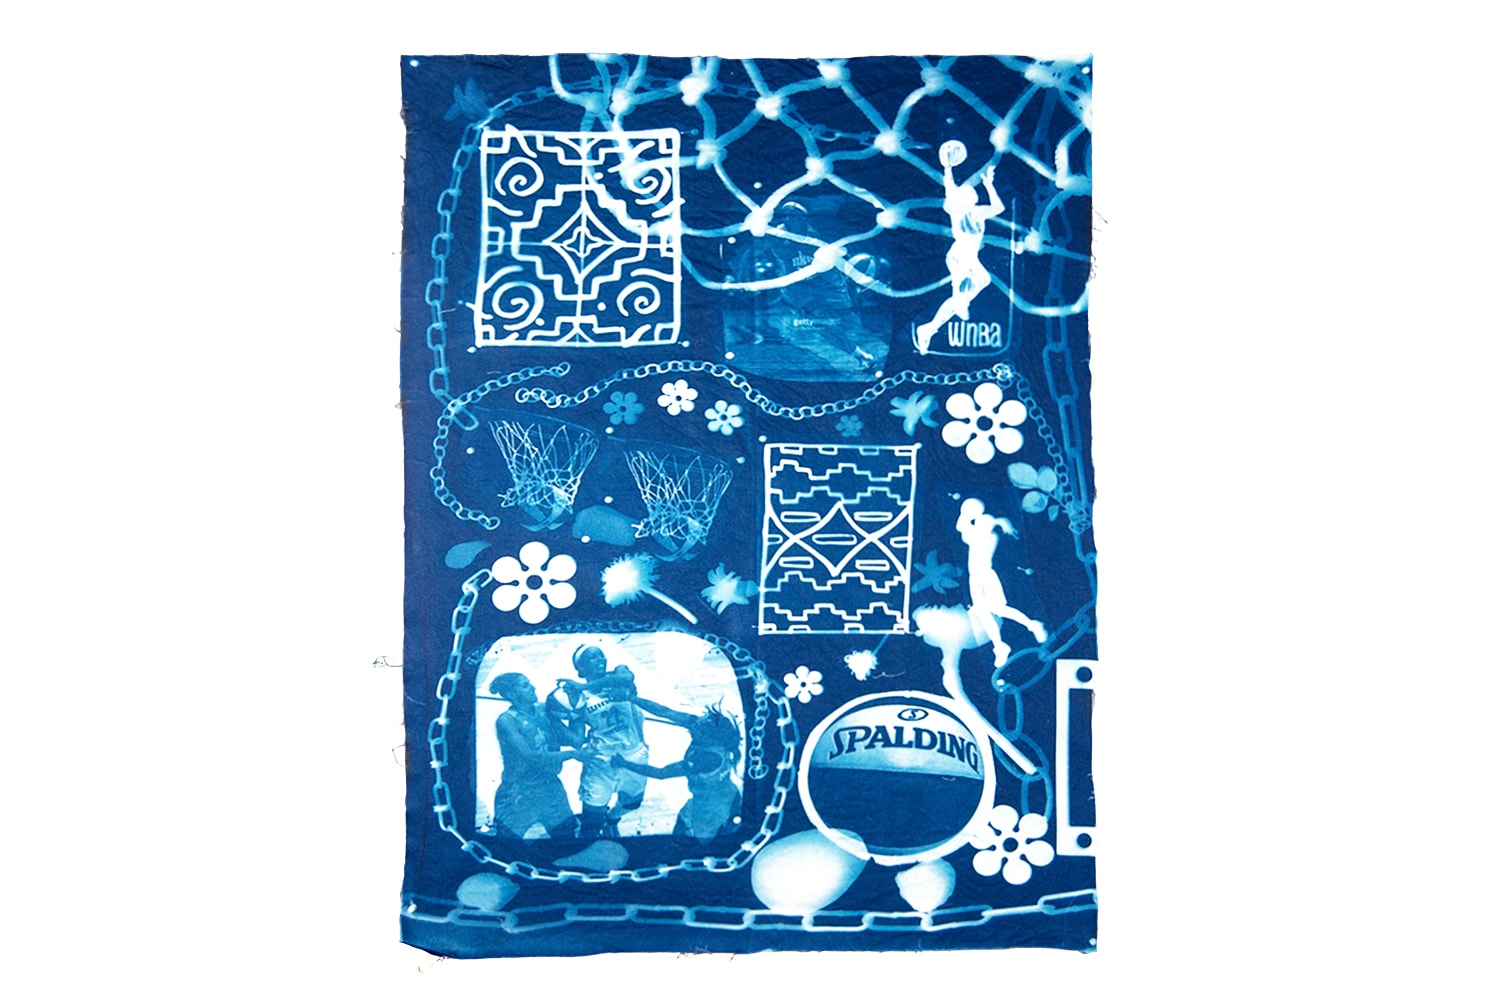 andrea bergart peace love basketball cyanotype fabric art artwork exhibitiona